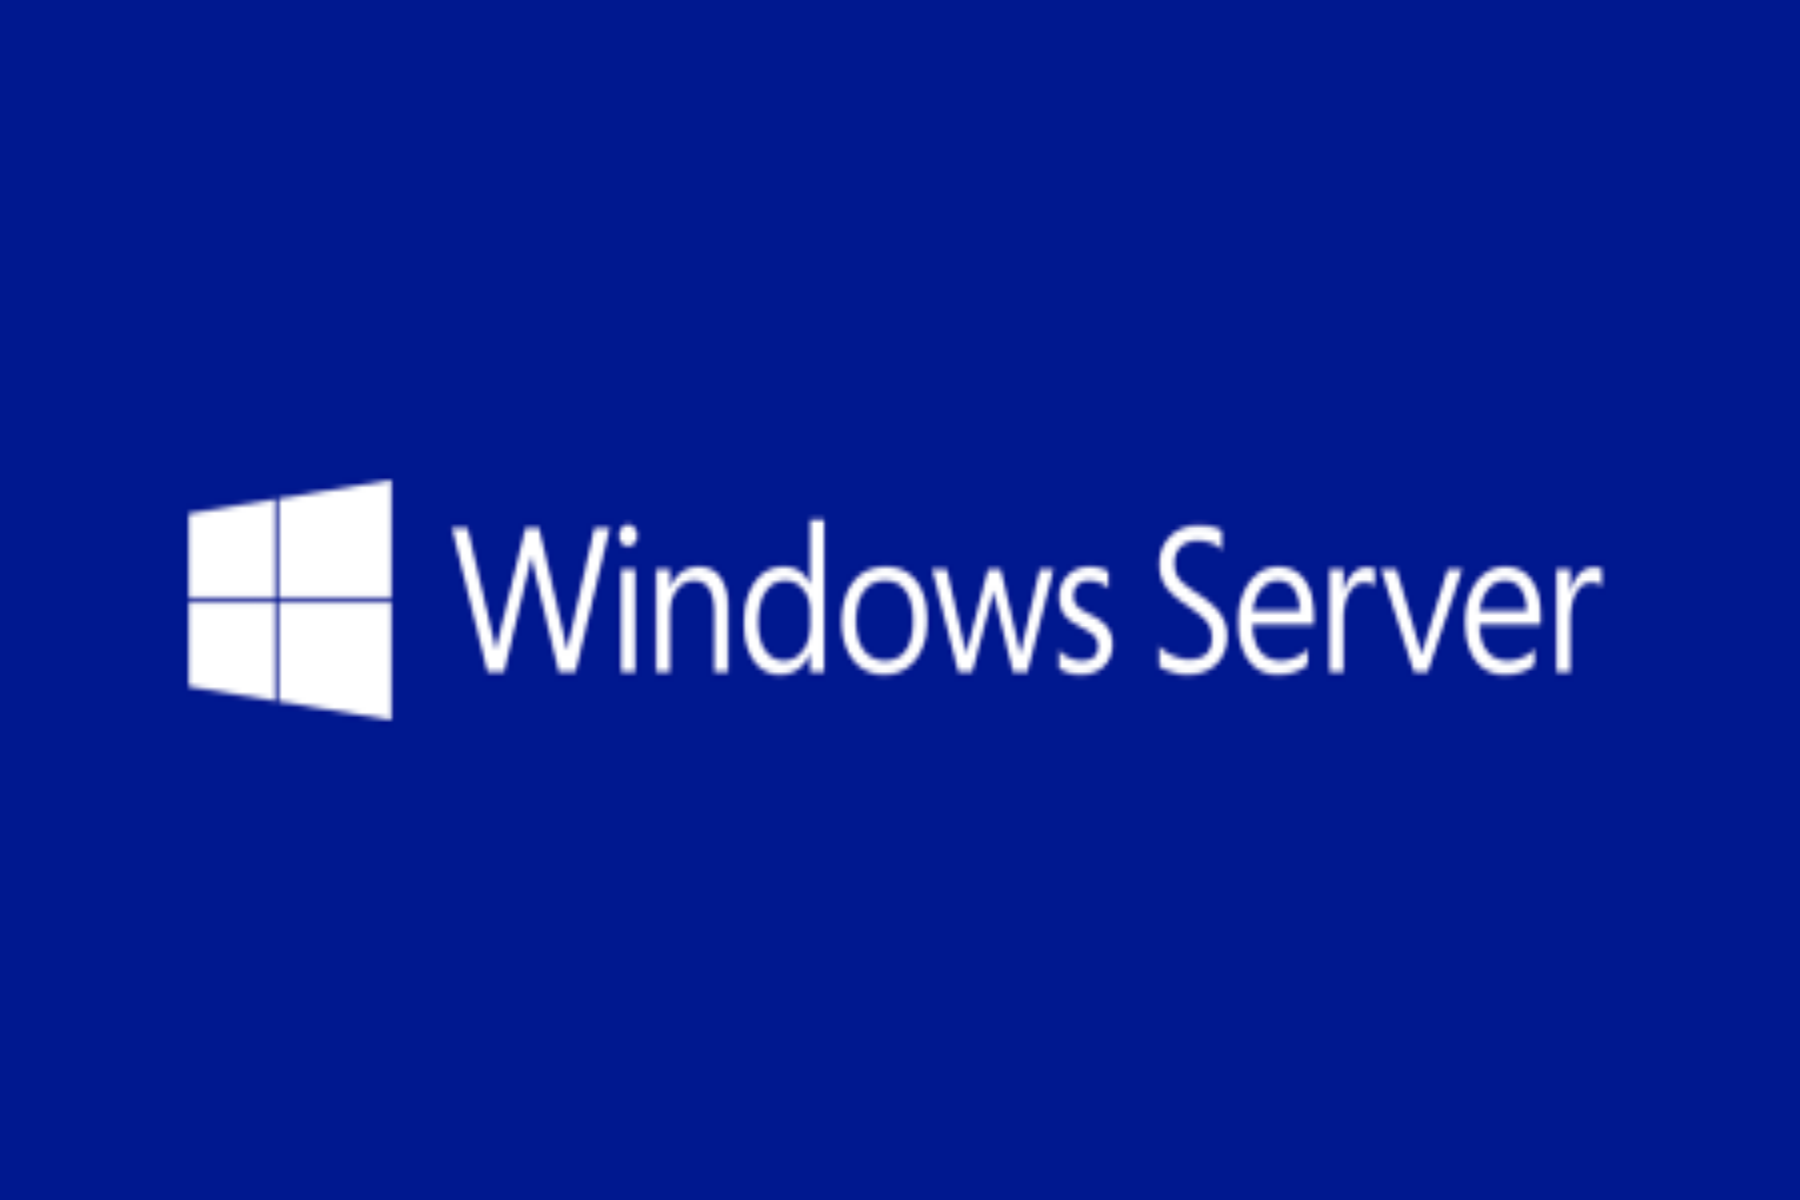 Windows Server Training in Chennai